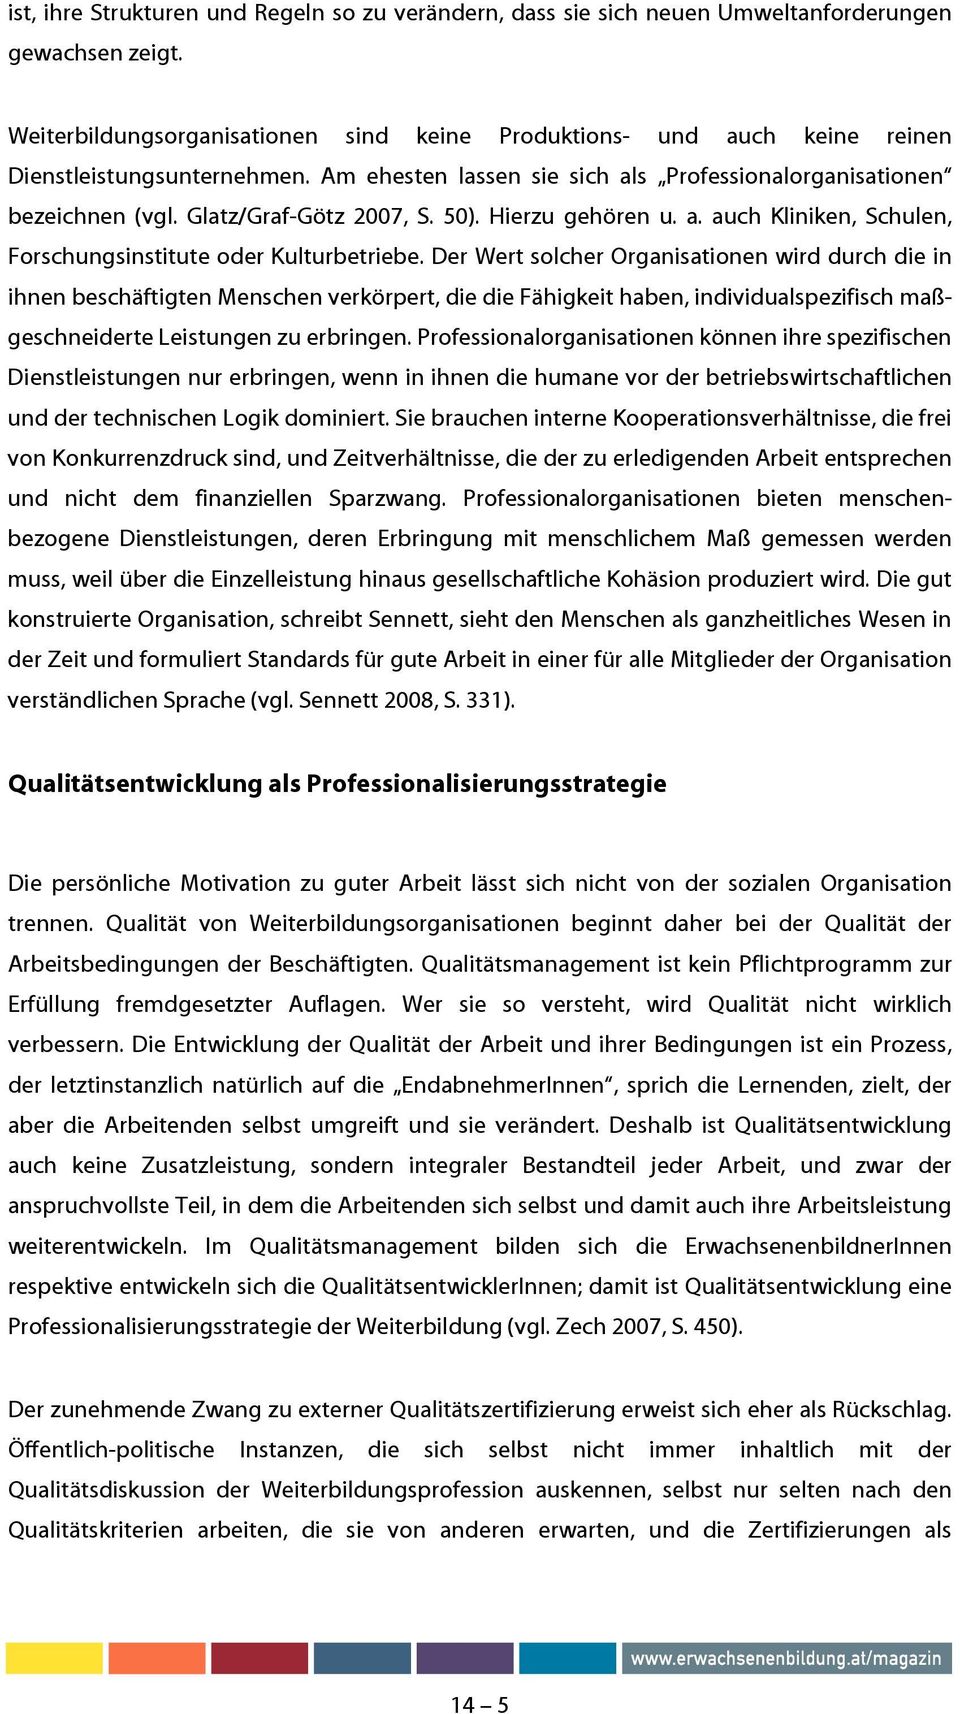 Glatz/Graf-Götz 2007, S. 50). Hierzu gehören u. a. auch Kliniken, Schulen, Forschungsinstitute oder Kulturbetriebe.